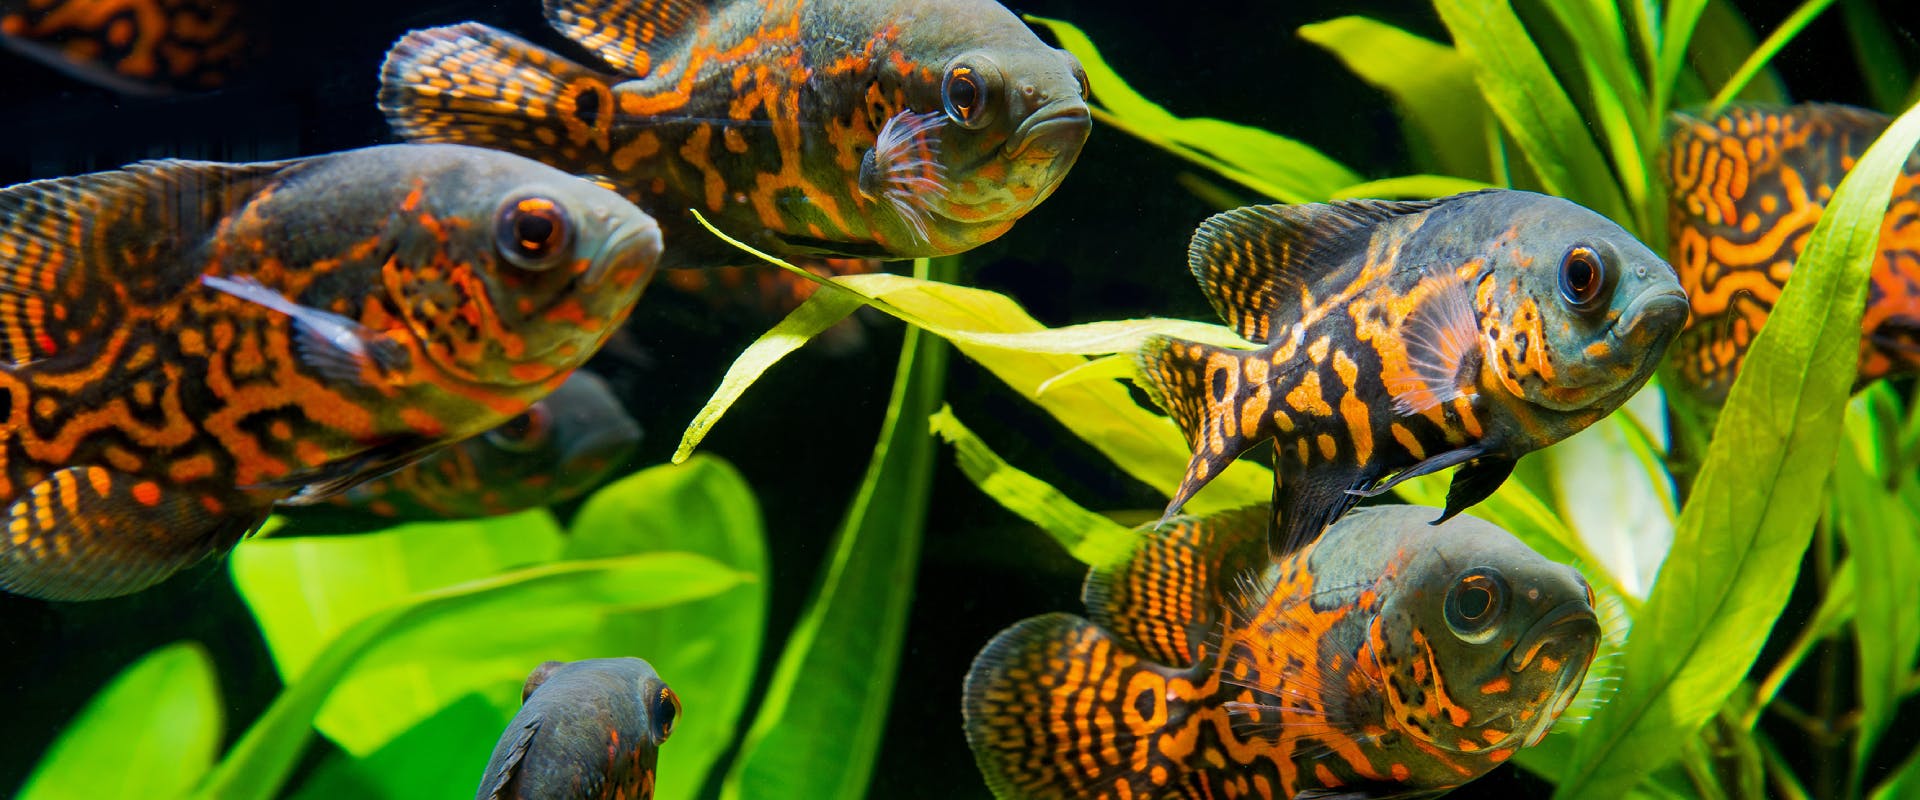 Pet fish in an aquarium